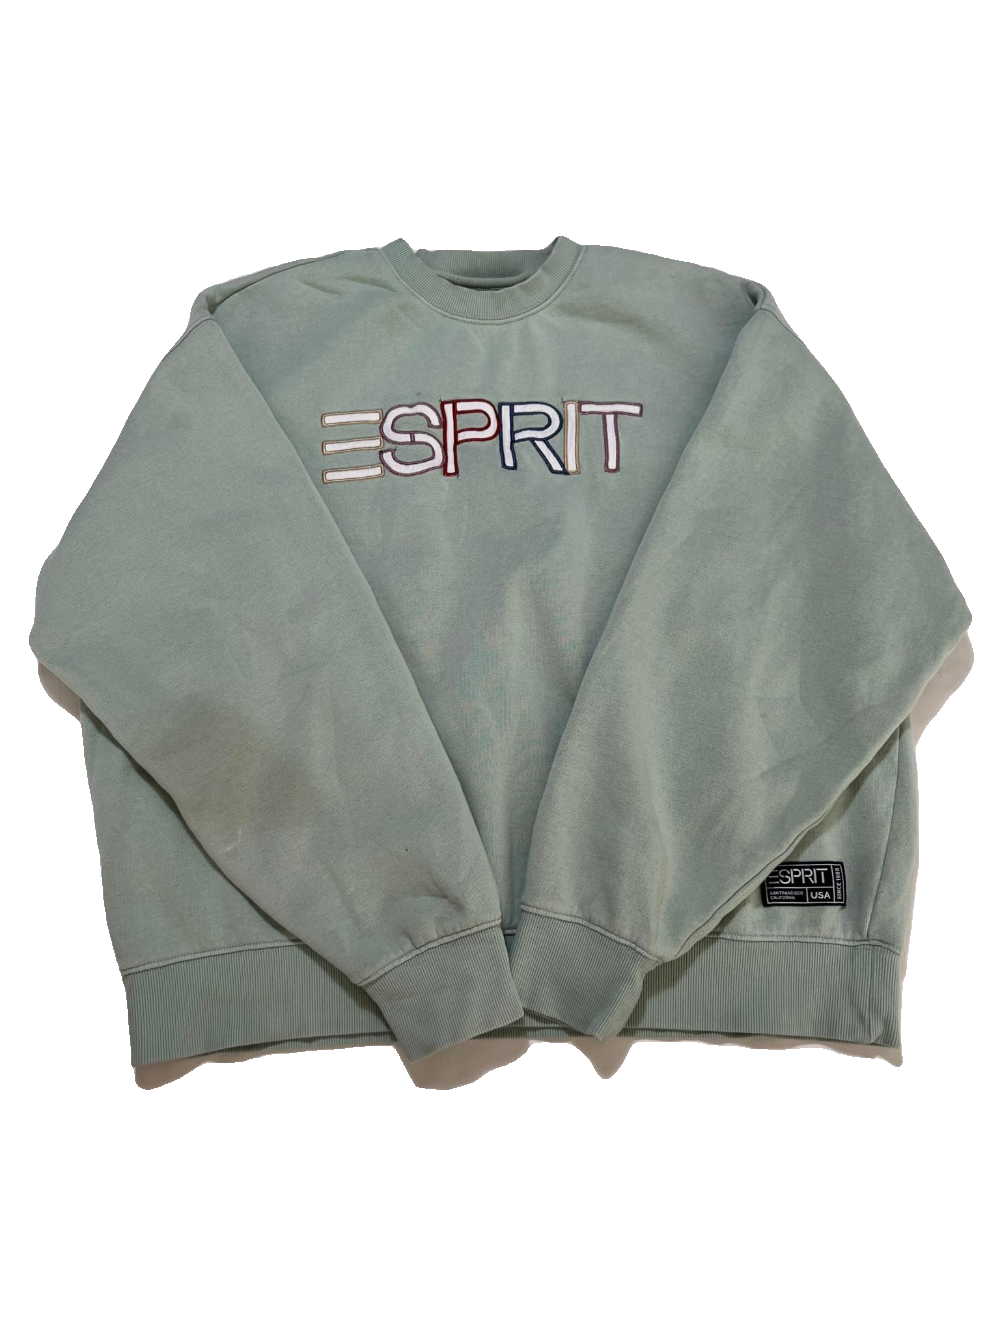 Esprit- Green "Esprit" Sweatshirt